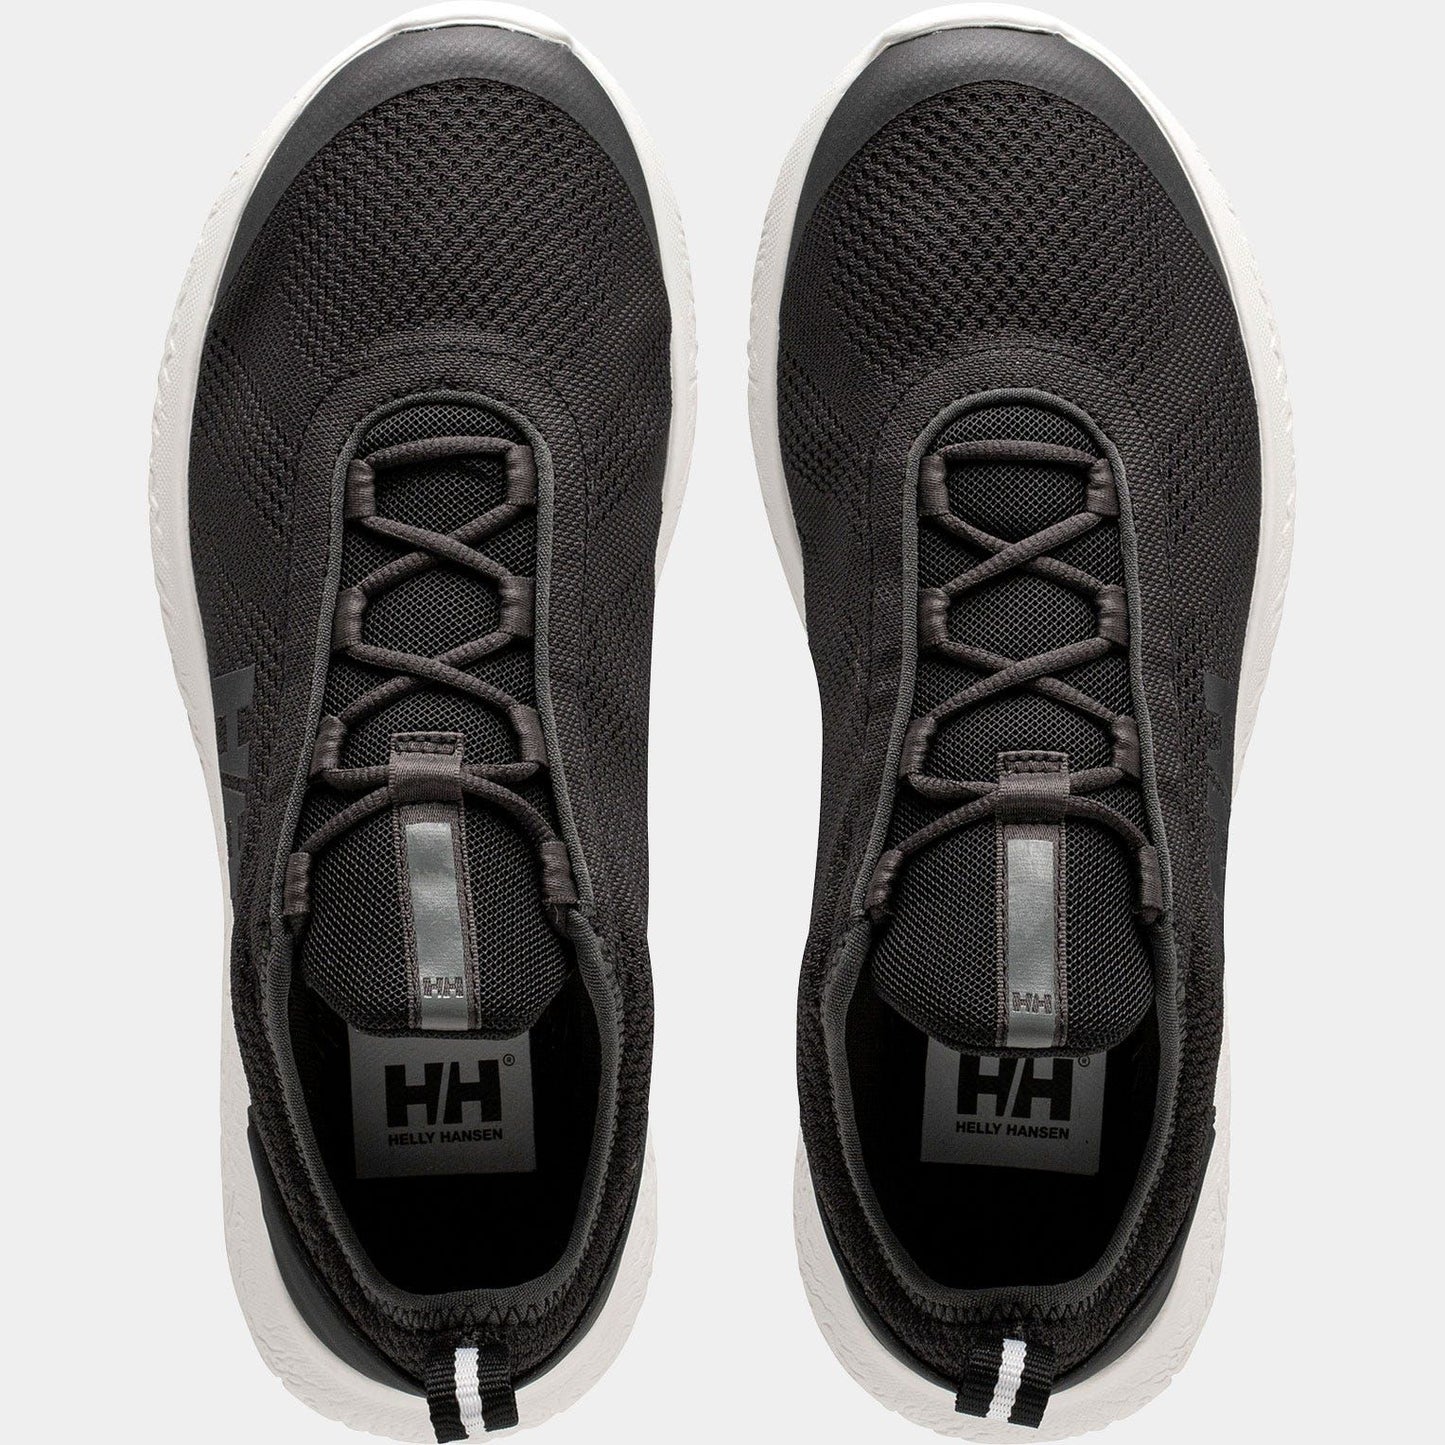 Helly Hansen Men's Supalight Medley Shoes Black/Offwhite